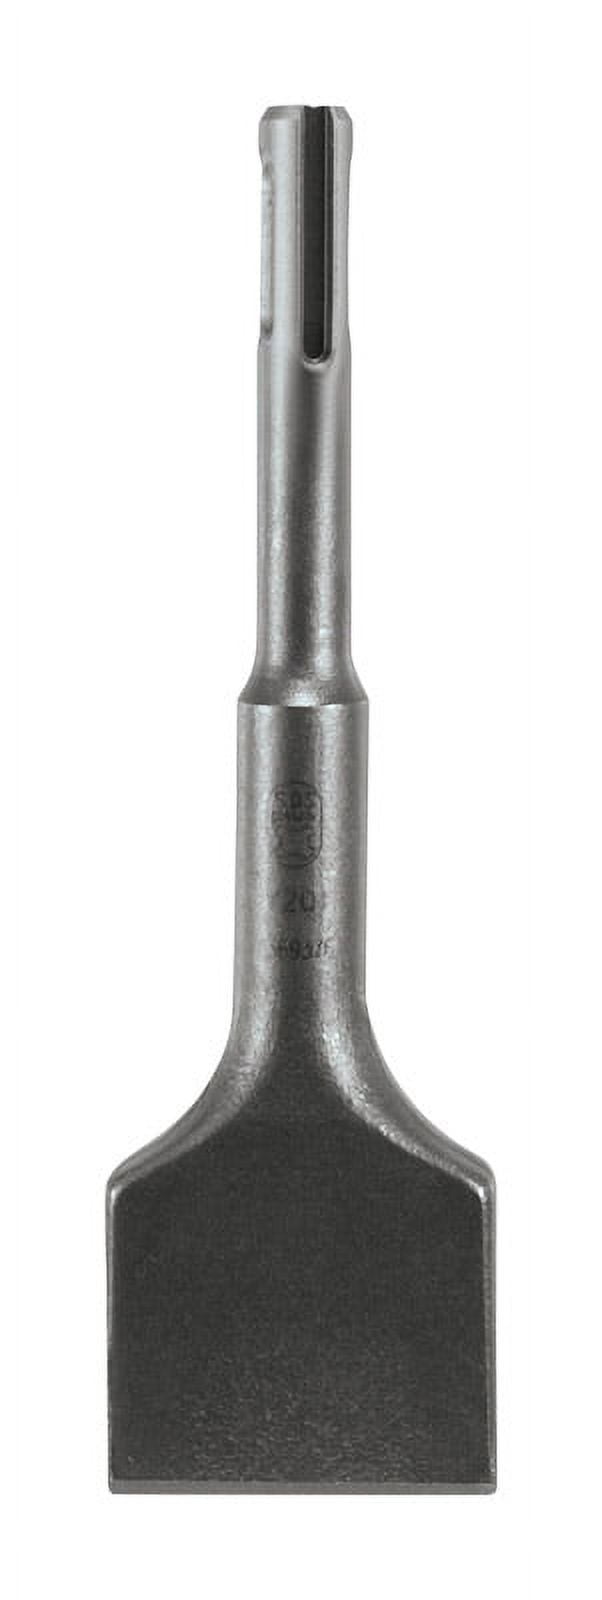 Hs1485 Stubby Scaling Chisel Sds-plus Bulldog Hammer Steel